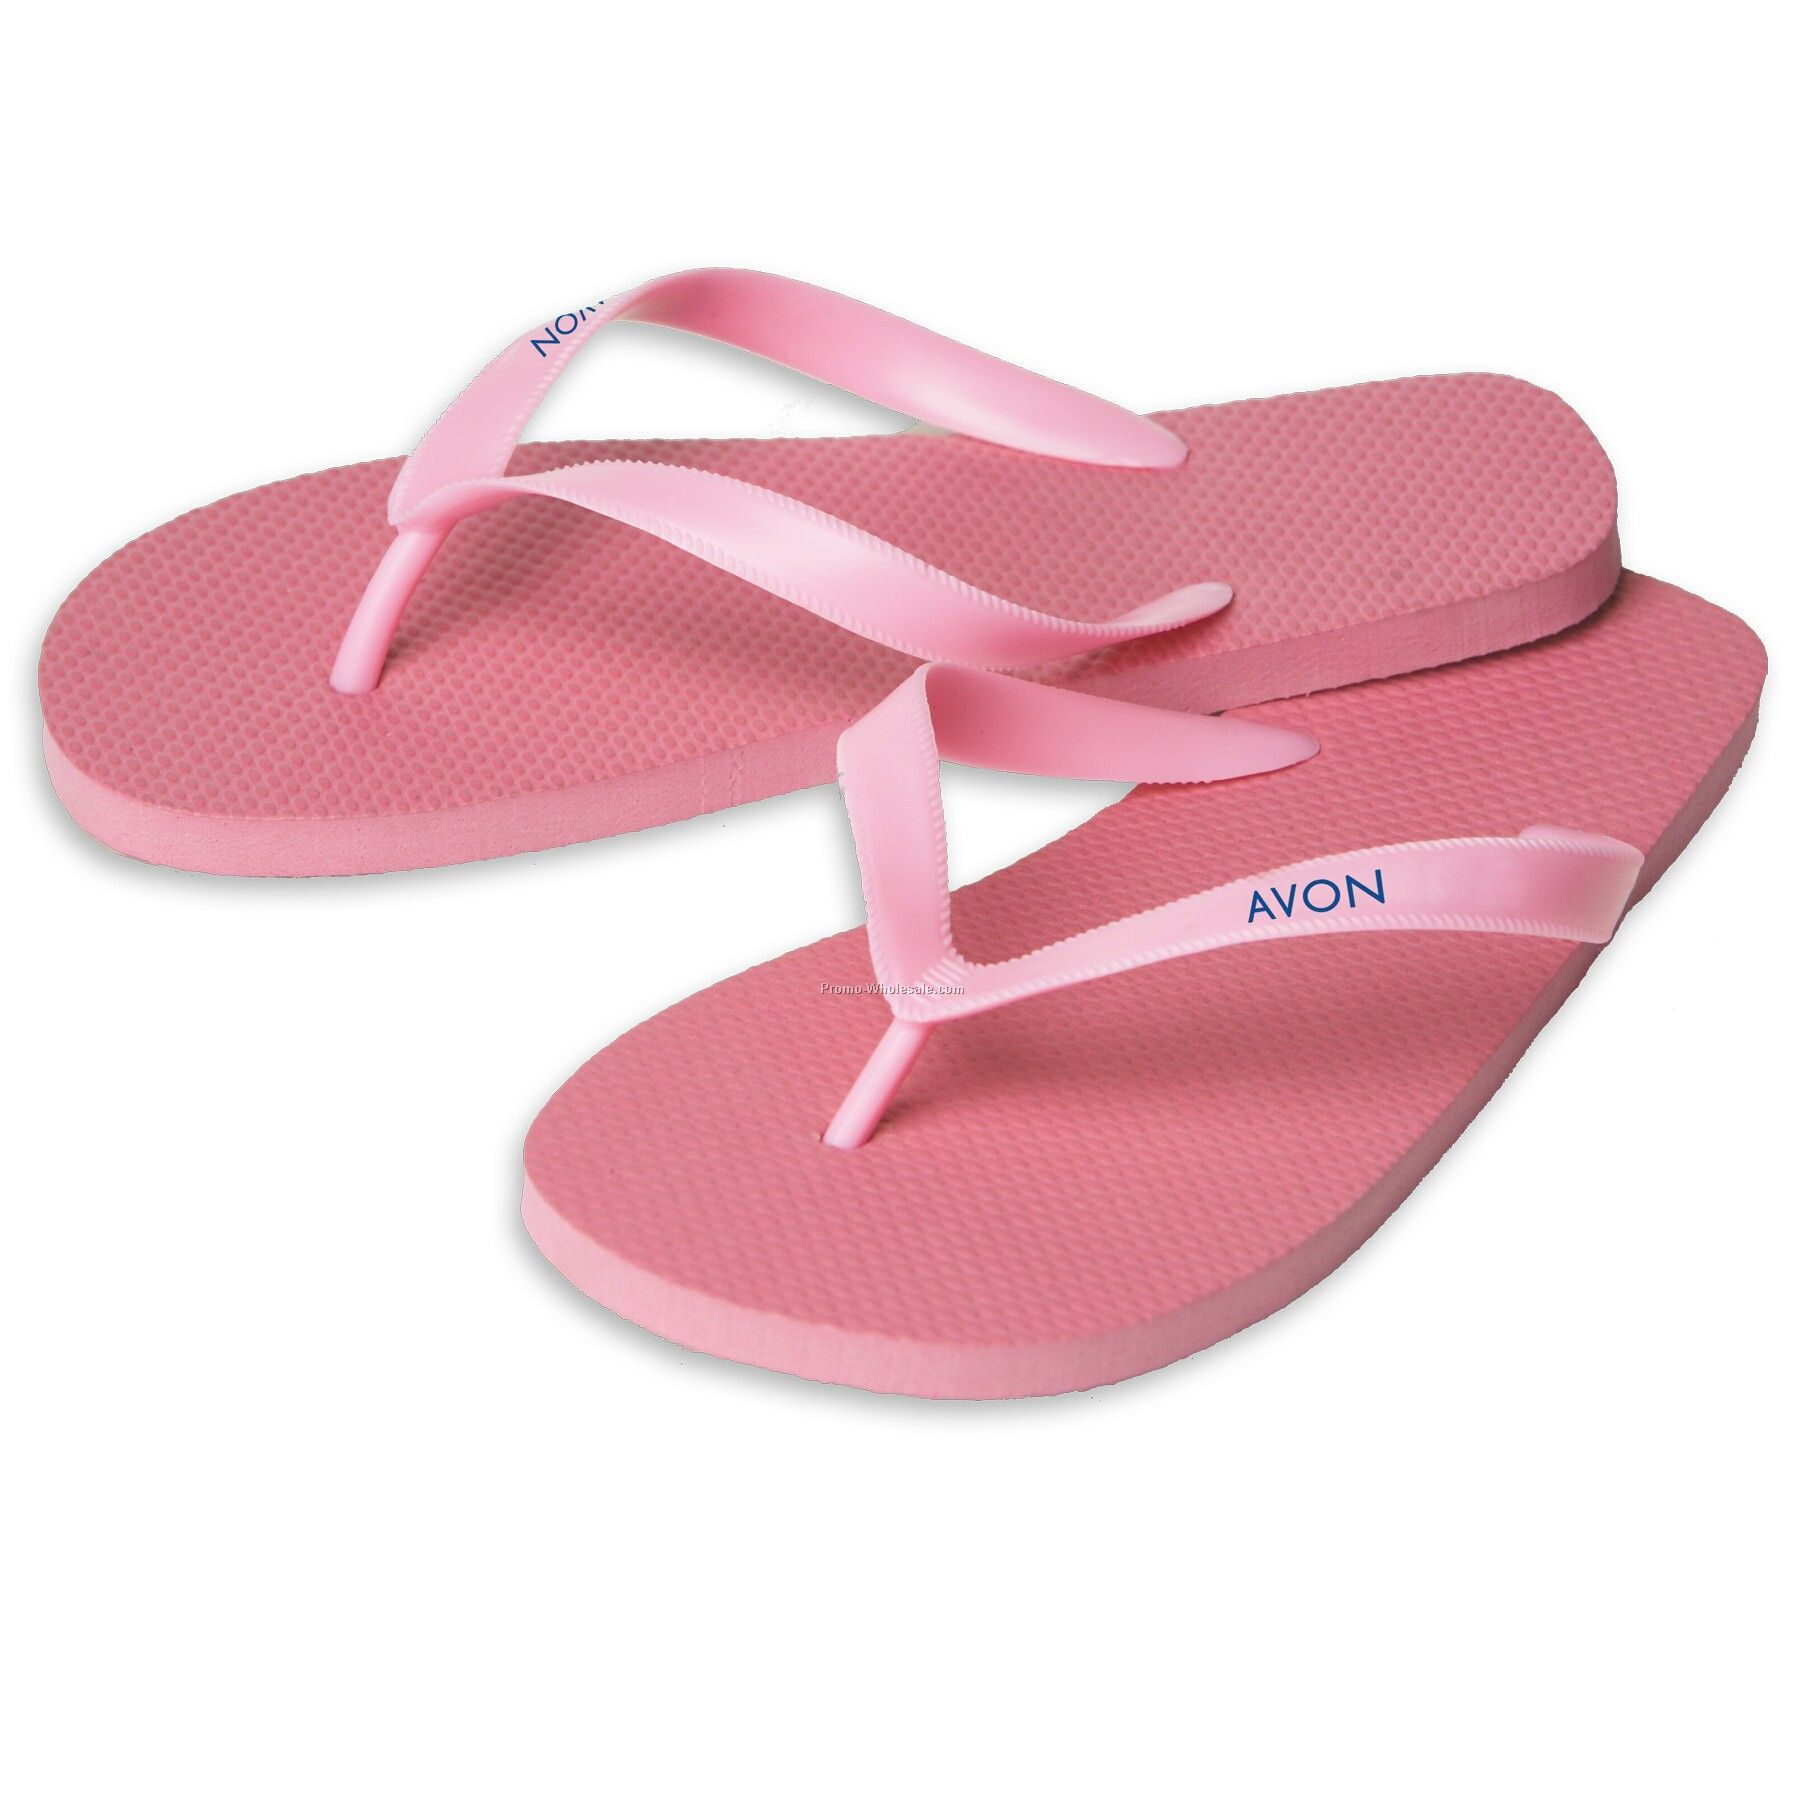 The Avalon Sandals - Classic Spa Style 12 Mm Sole Pvc Straps (Domestic)